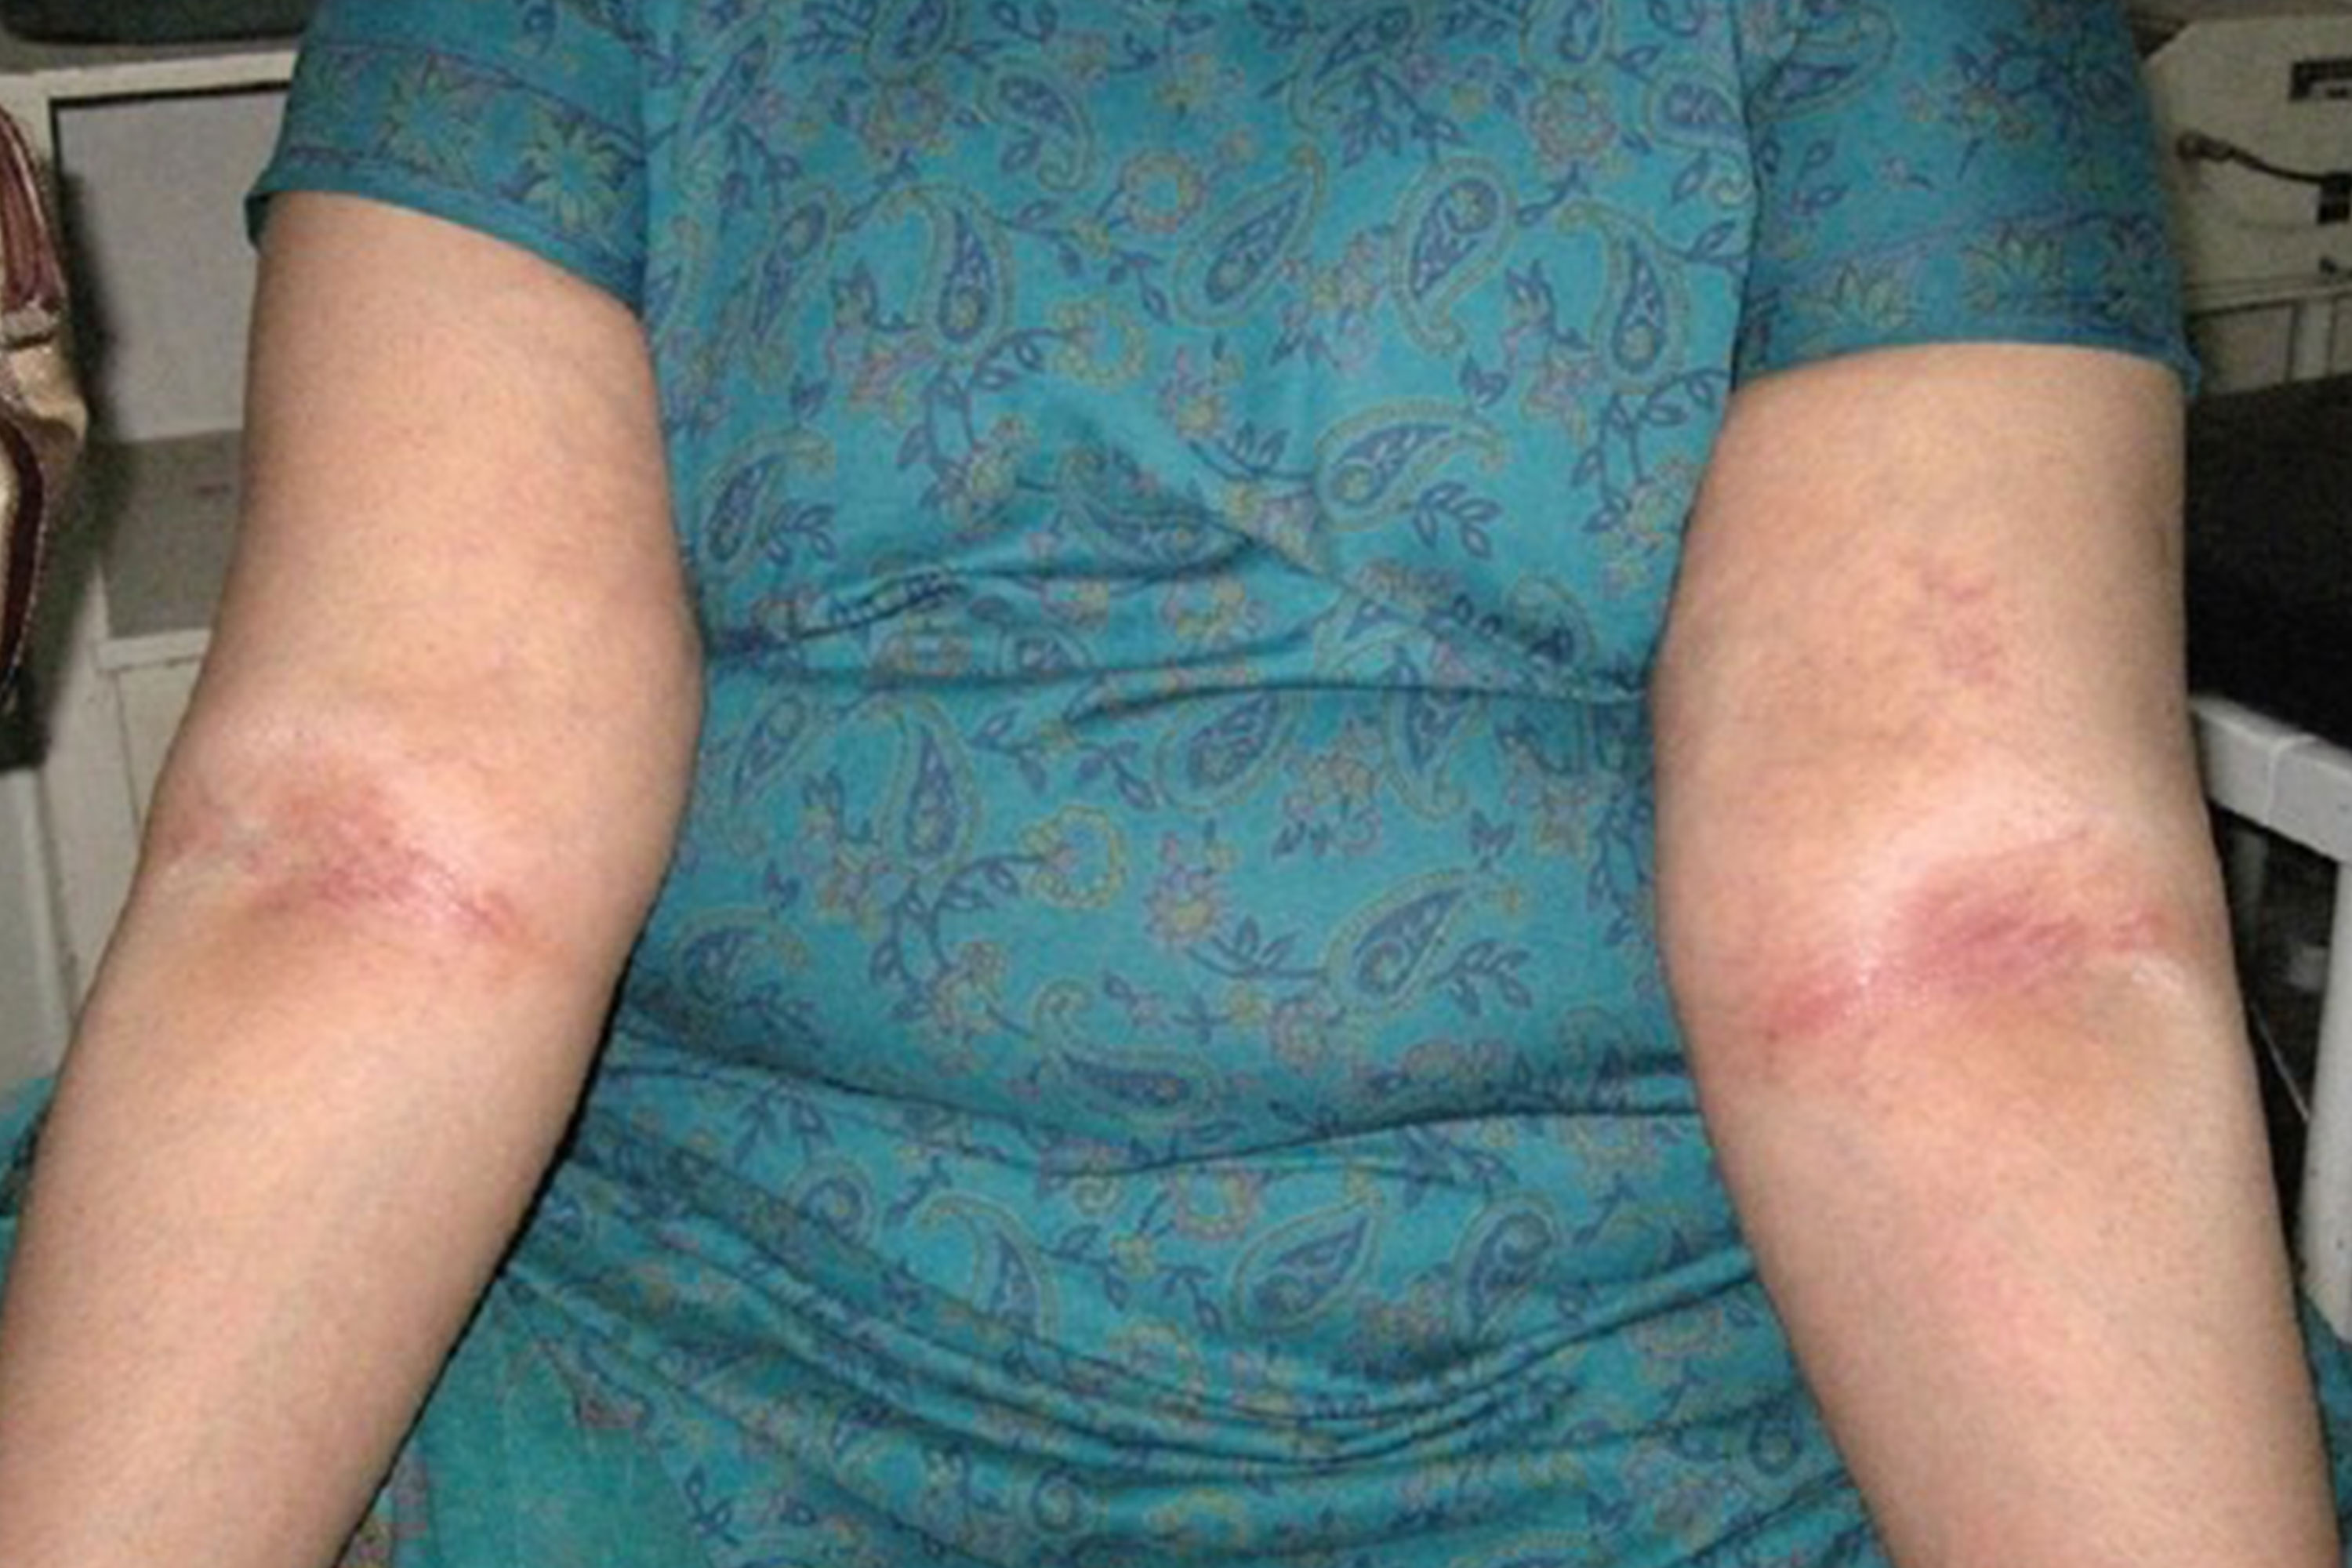 eczema bumps on elbows